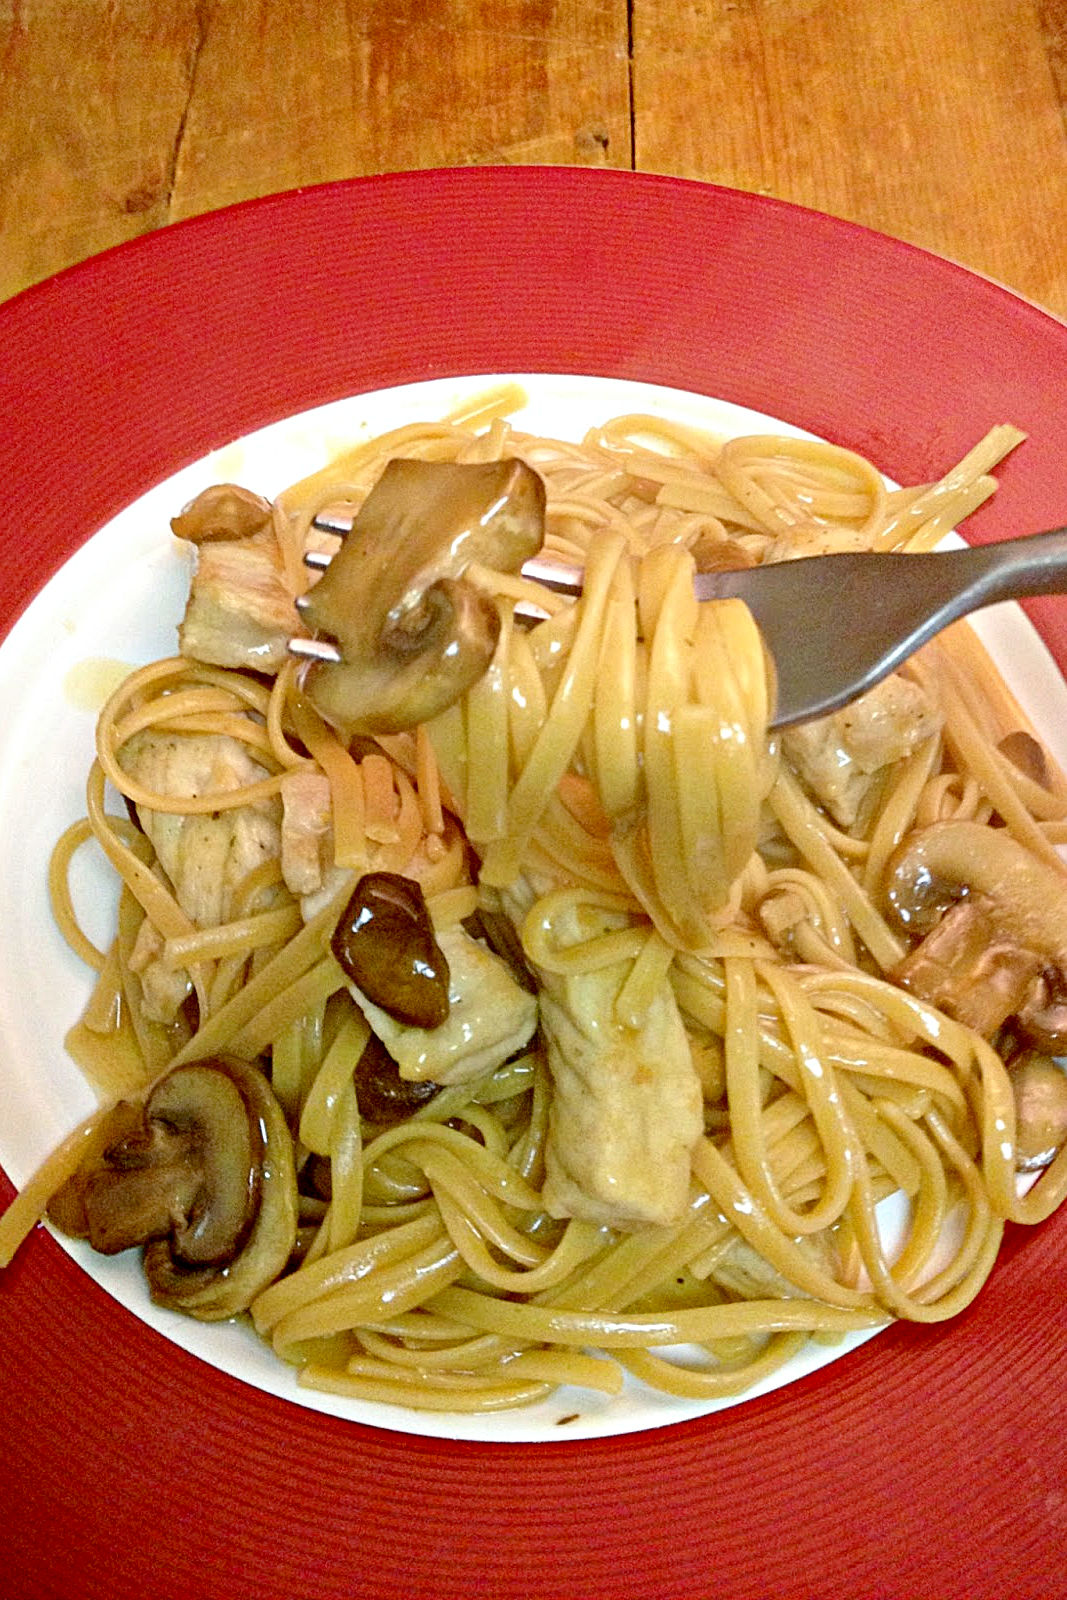 Rich pork Marsala sauce coats pasta and mushrooms.